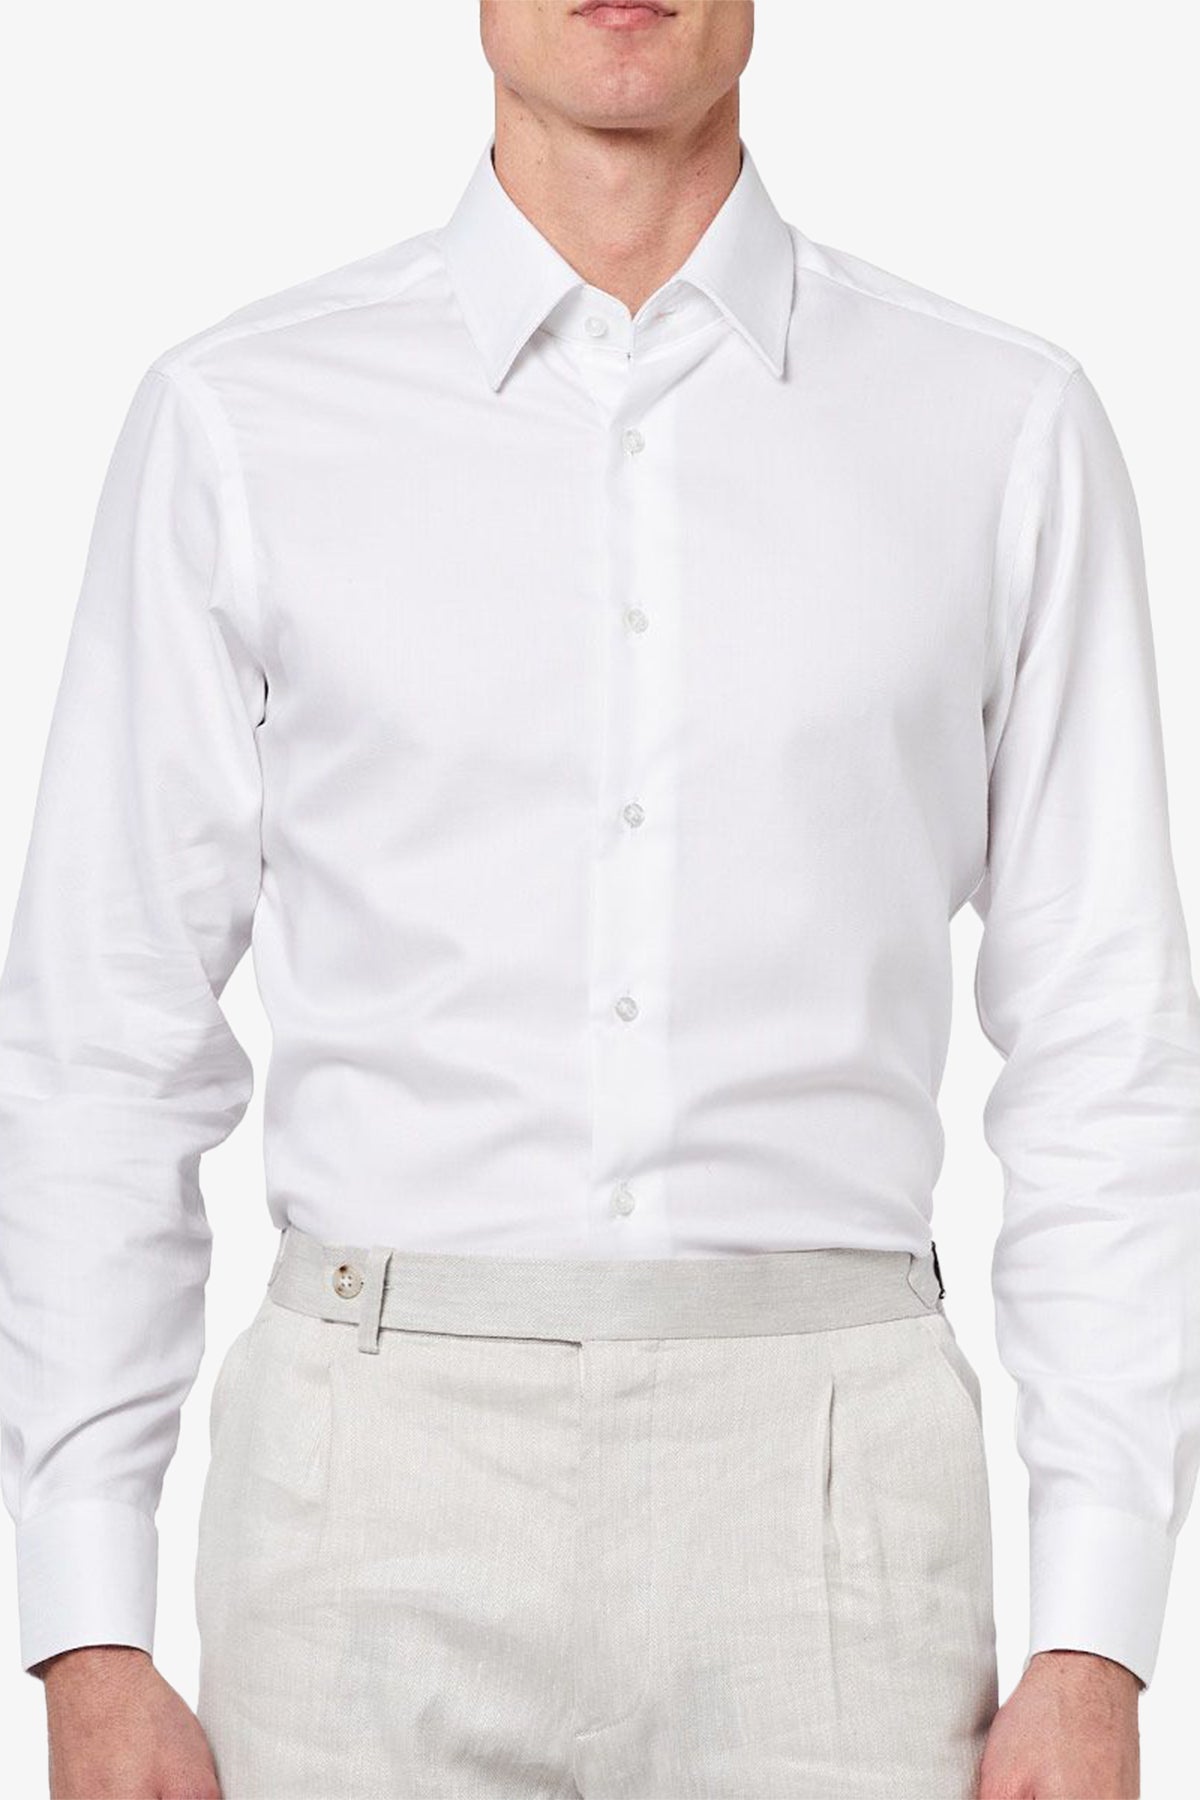 Alton - White Business shirt